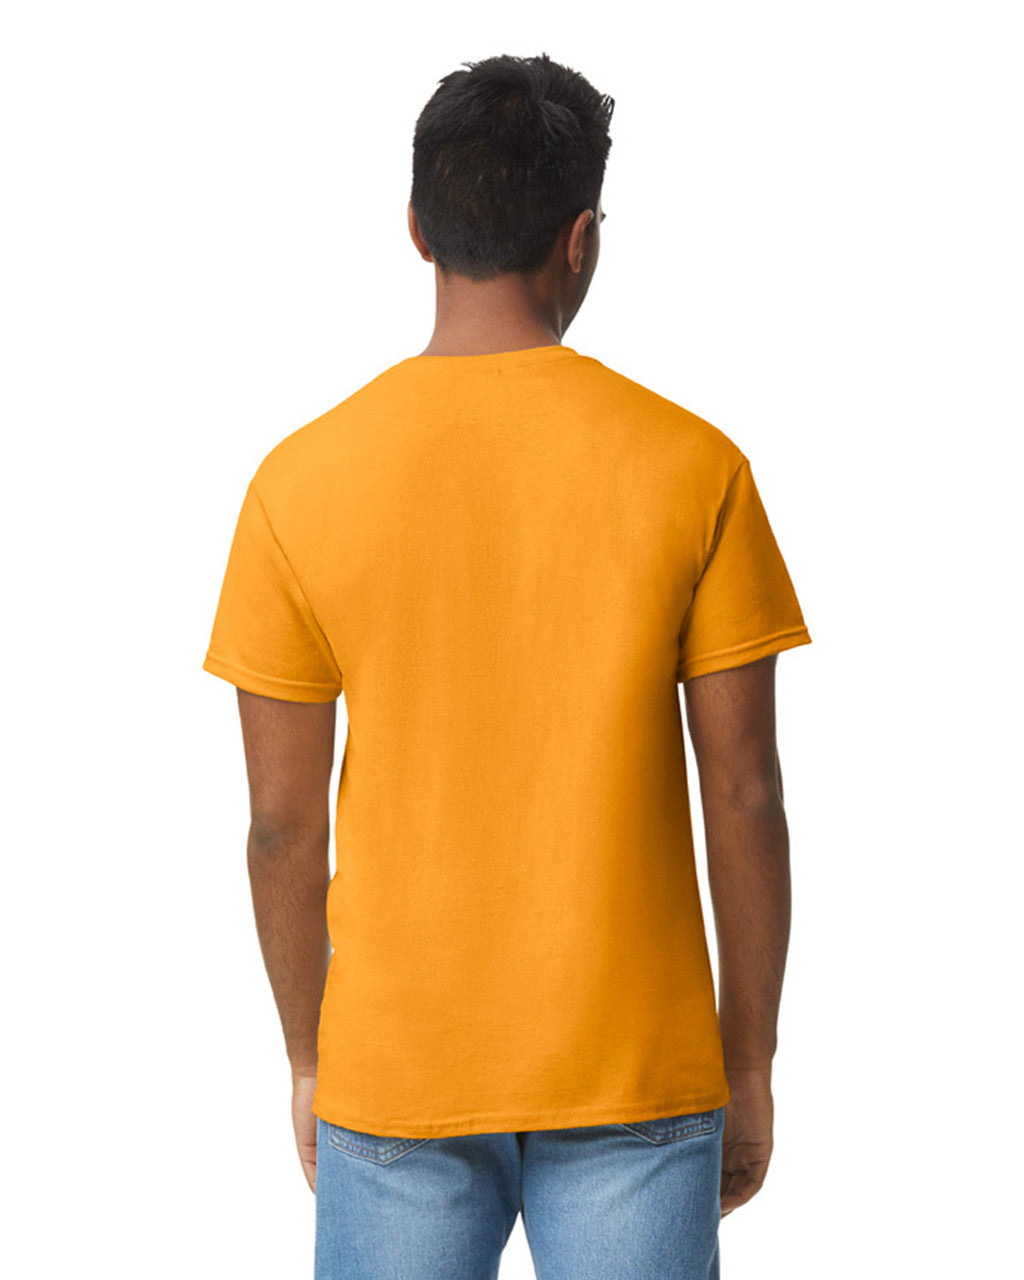 Camiseta Adulto Oro Gildan Ref. 5000